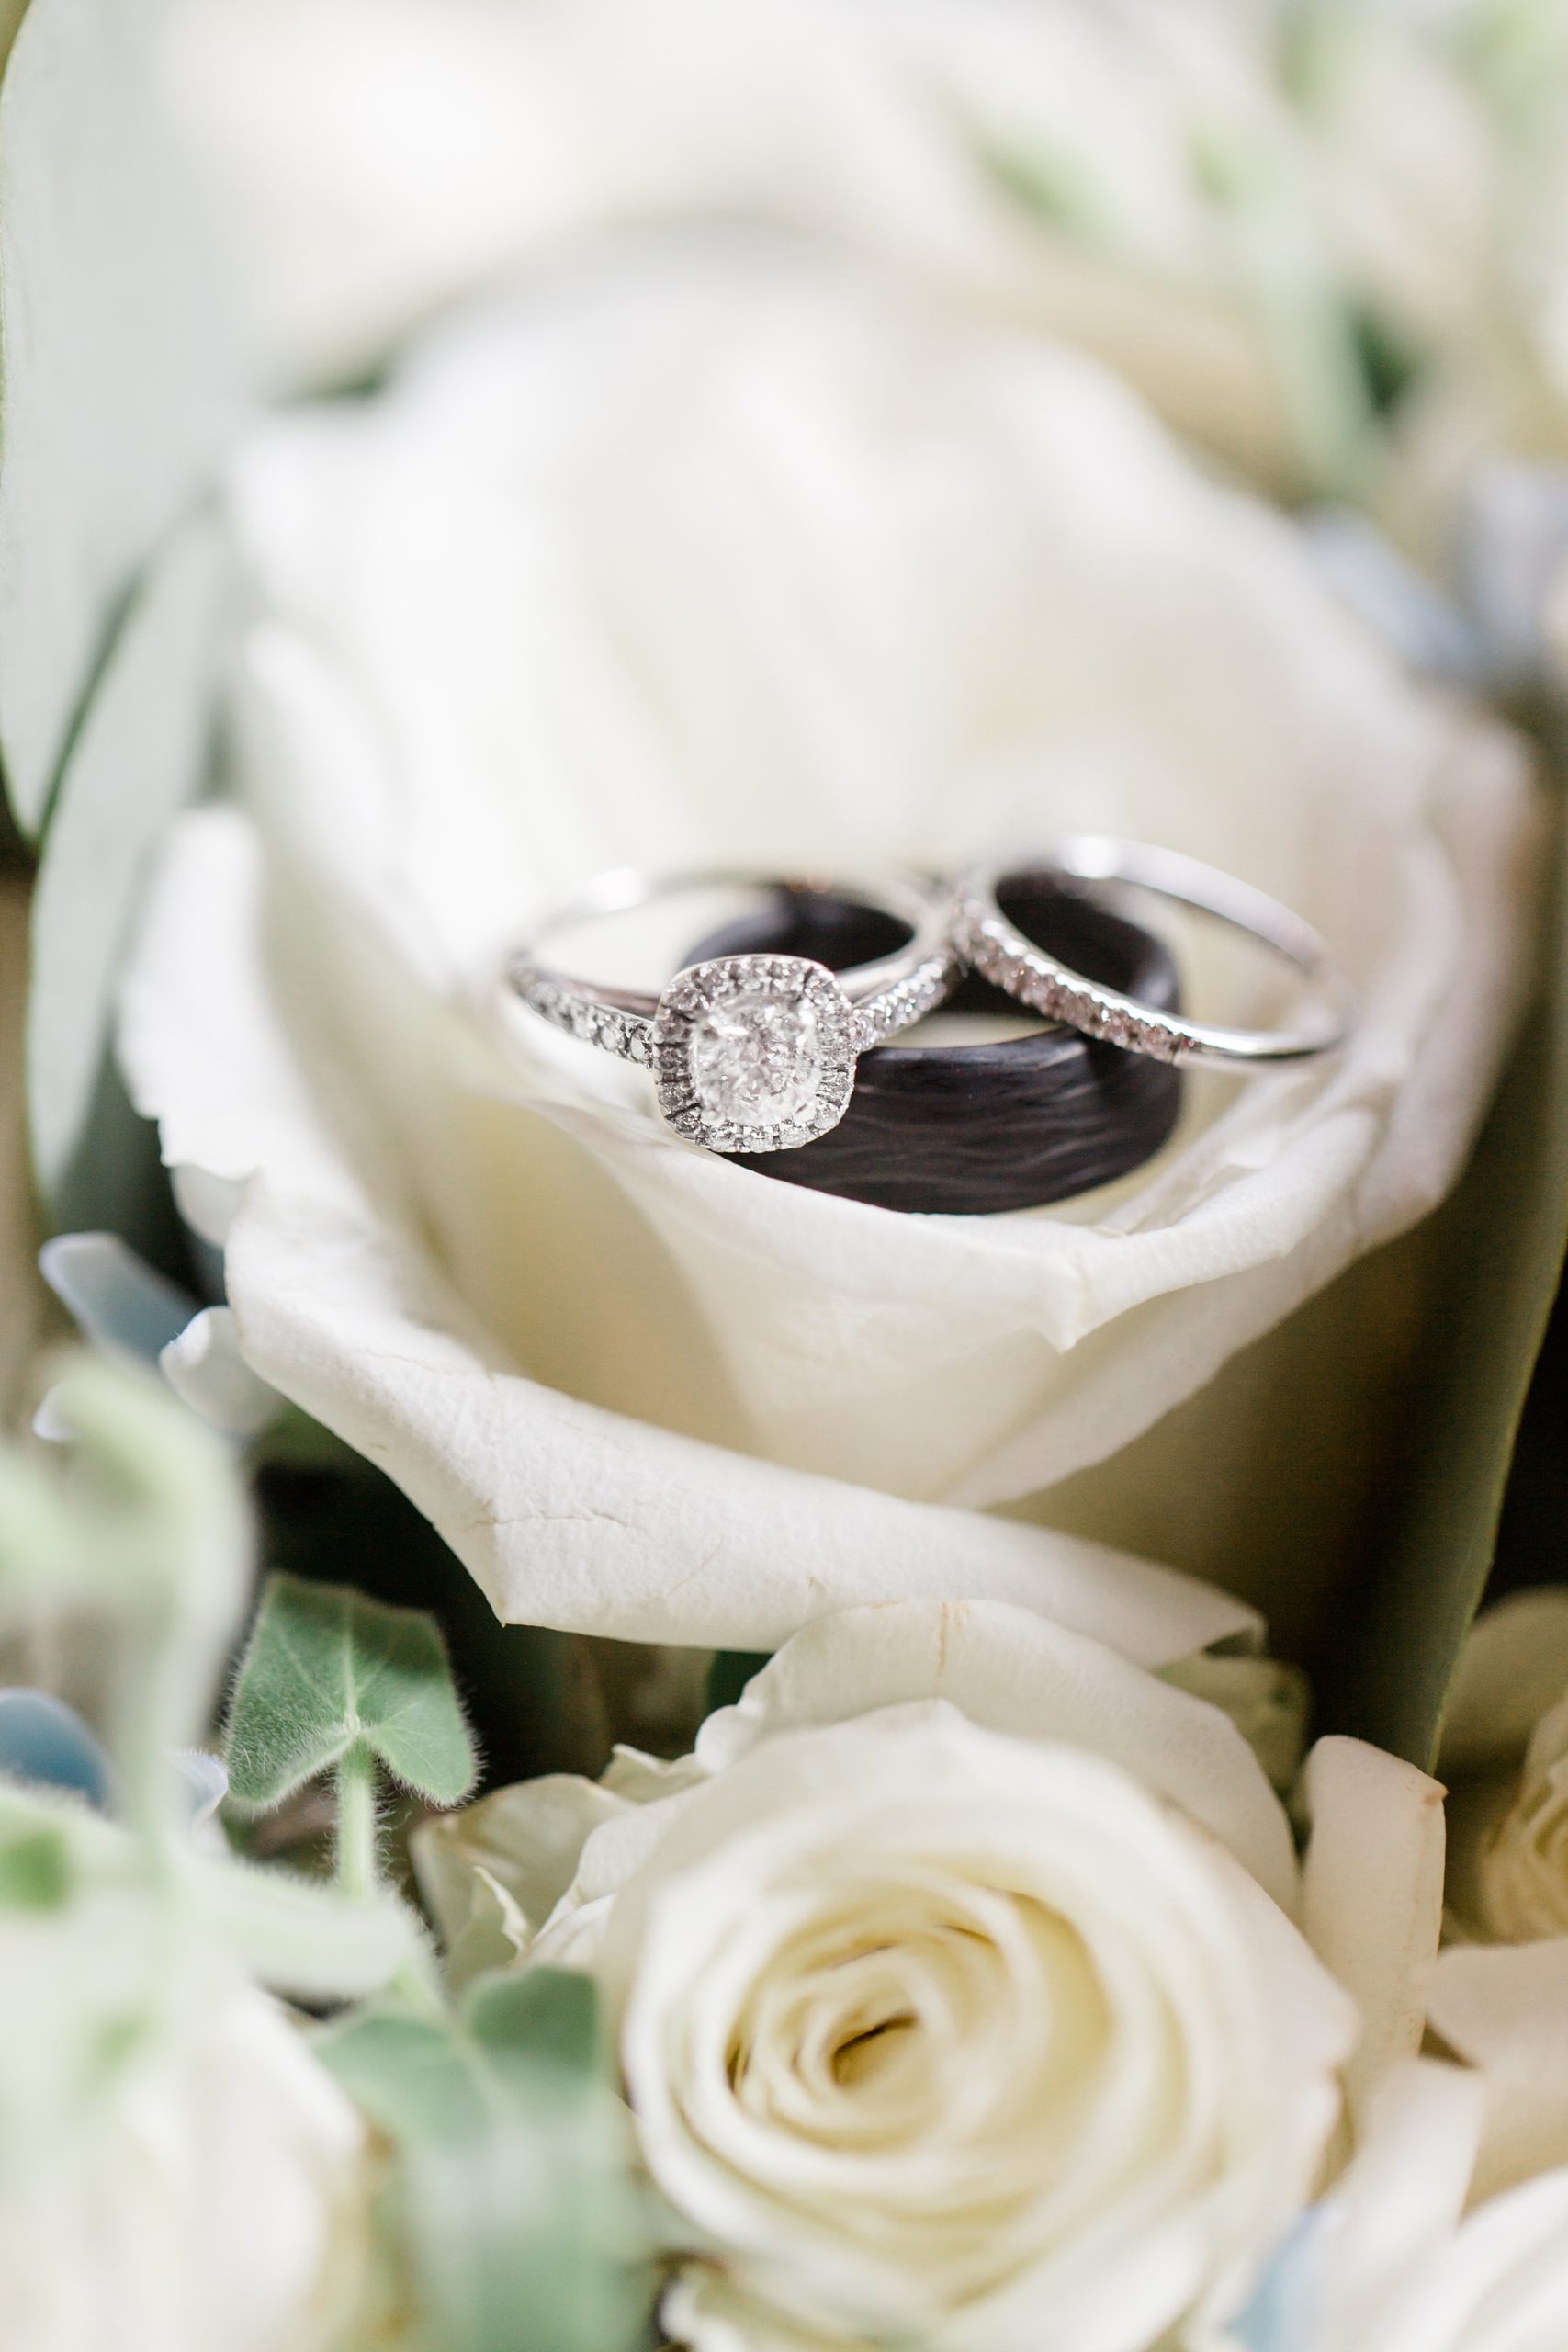 wedding rings rest on white flowers